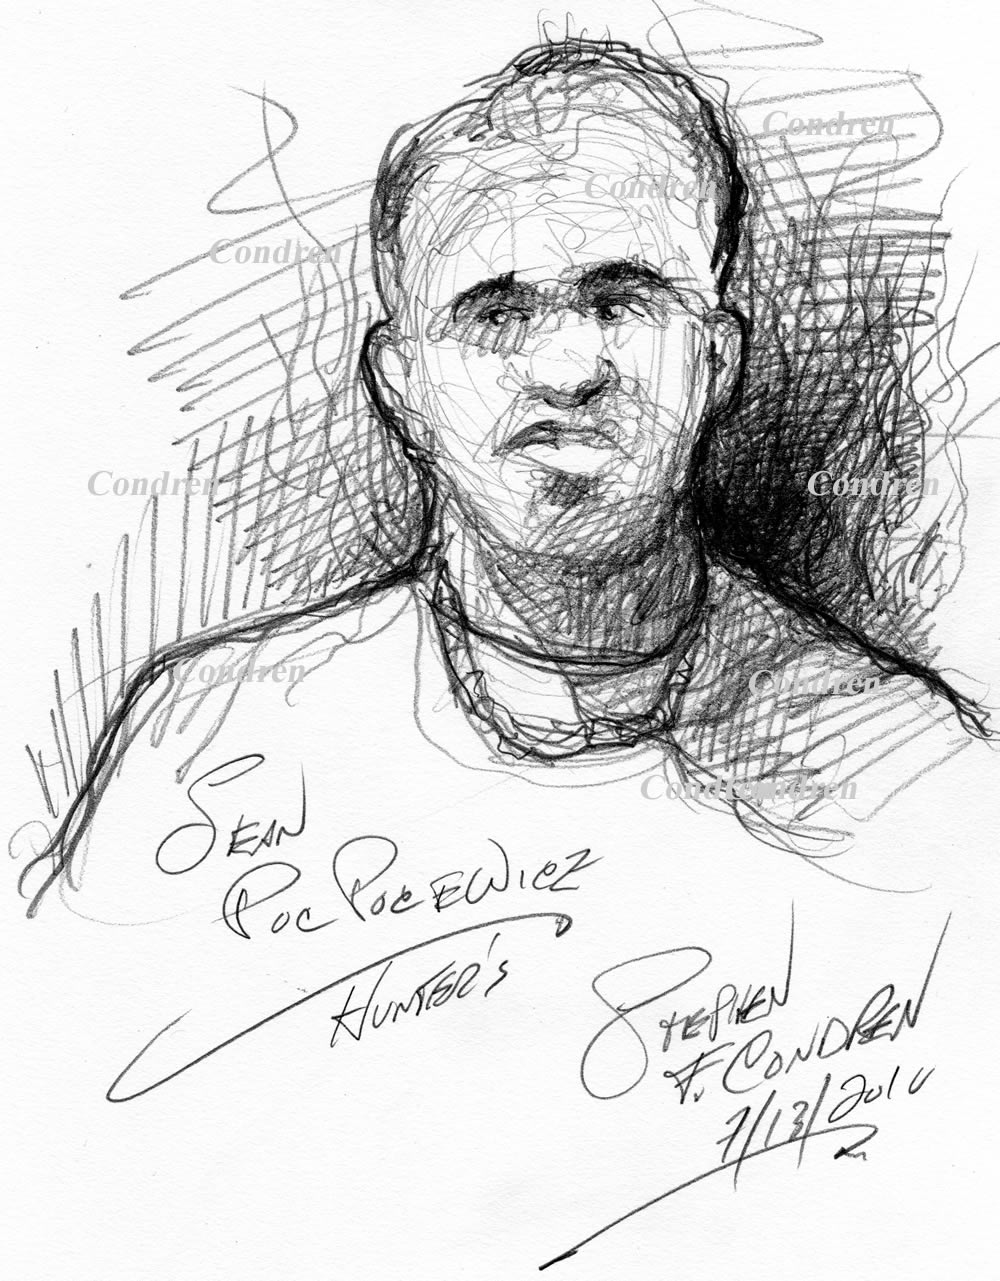 Sean Pocewicz #346Z pencil portrait by artist Stephen F. Condren.